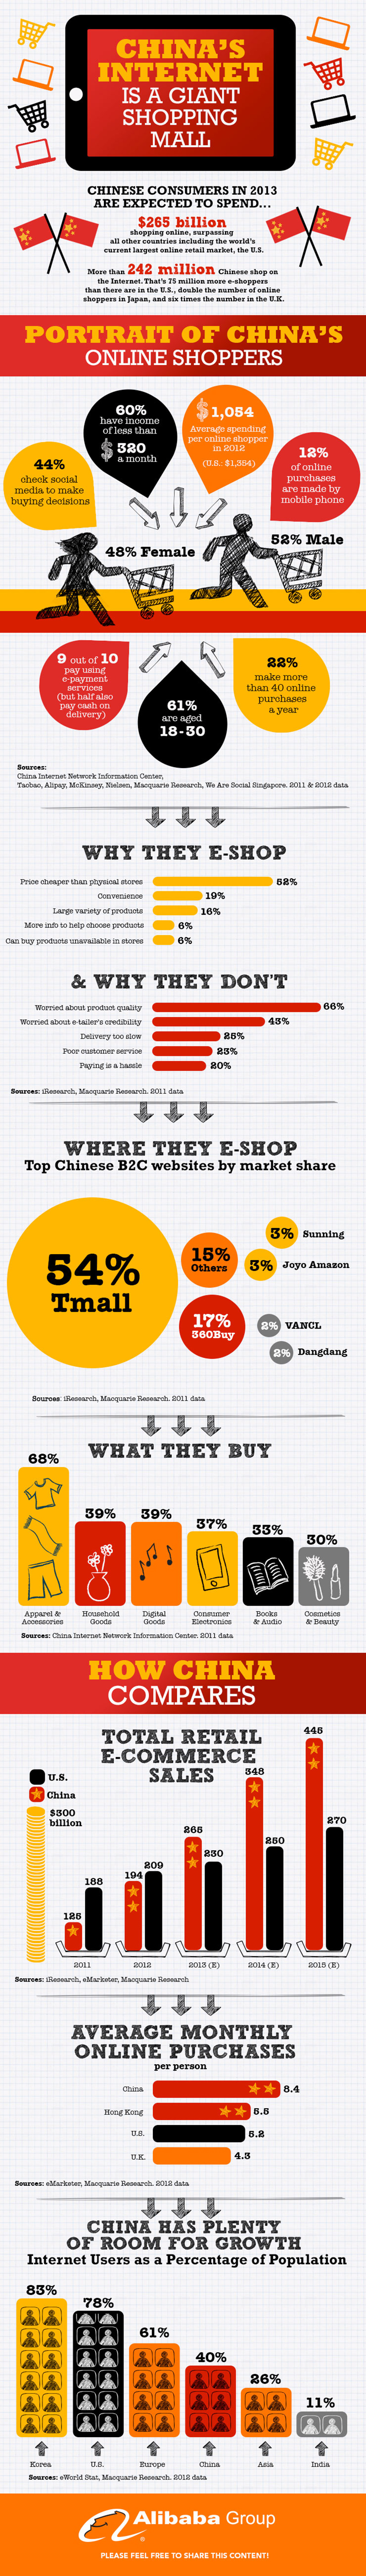 infographic-alibaba-ecommerce